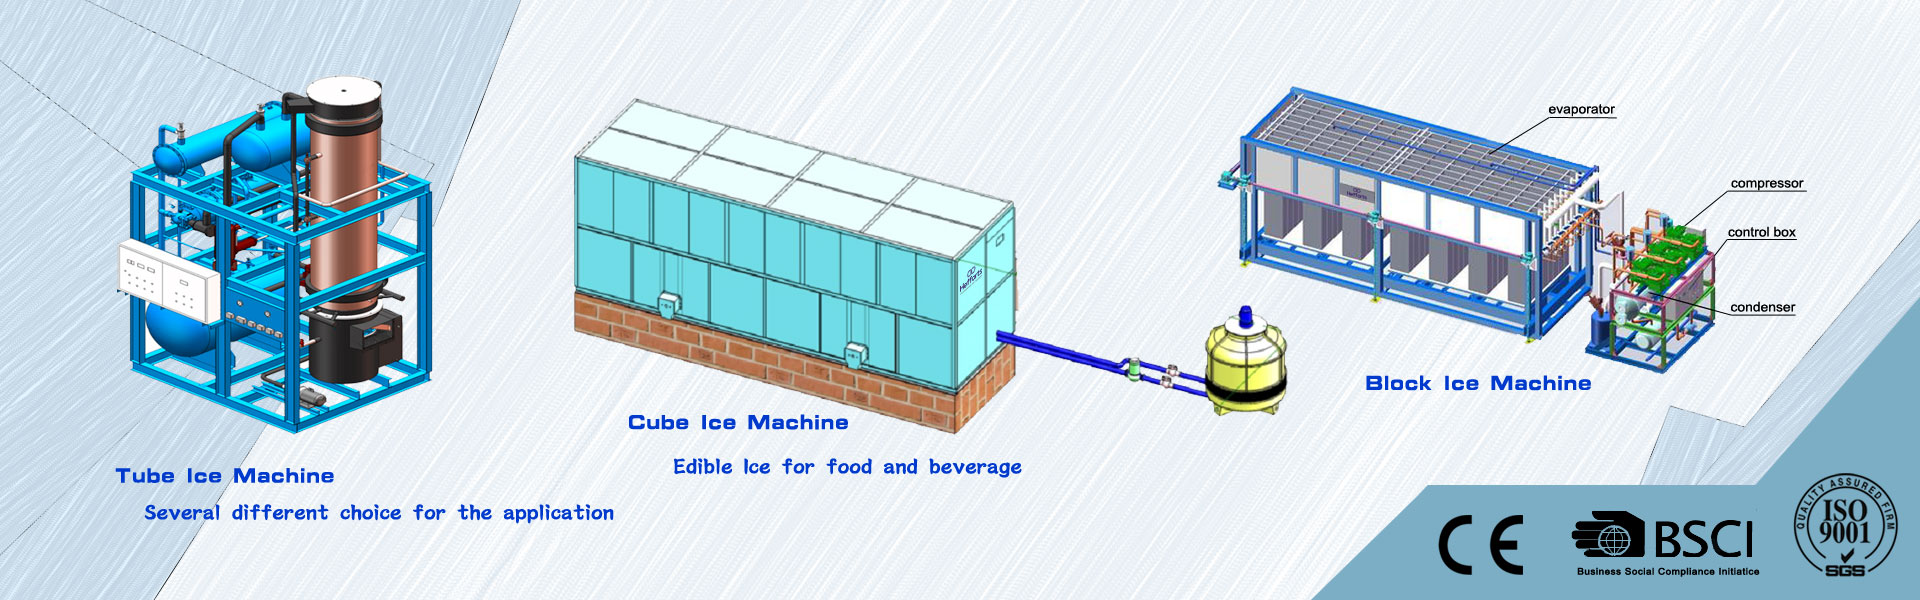 ismaskin, ismaskin, kylrum,Guangzhou Hefforts Refrigeration Equipment Co.,Ltd.